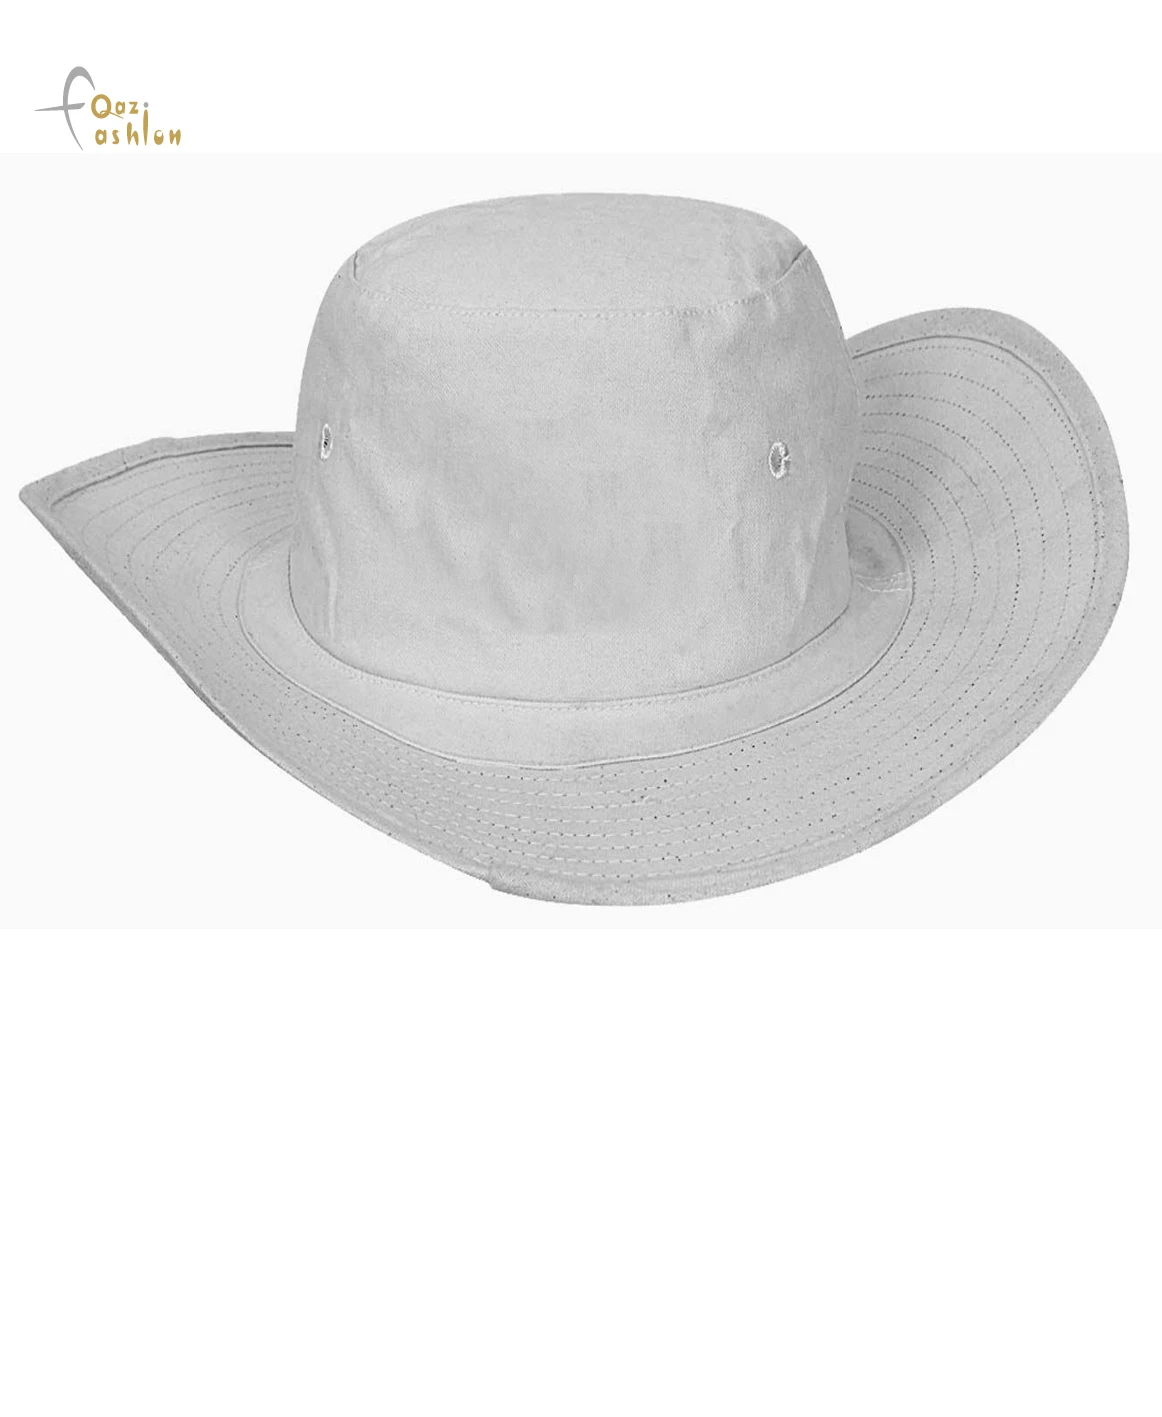 Мужская хлопковая спортивная шапка для крикета с вышивкой на заказ, хлопковая белая широкополая шляпа для крикета с вышивкой